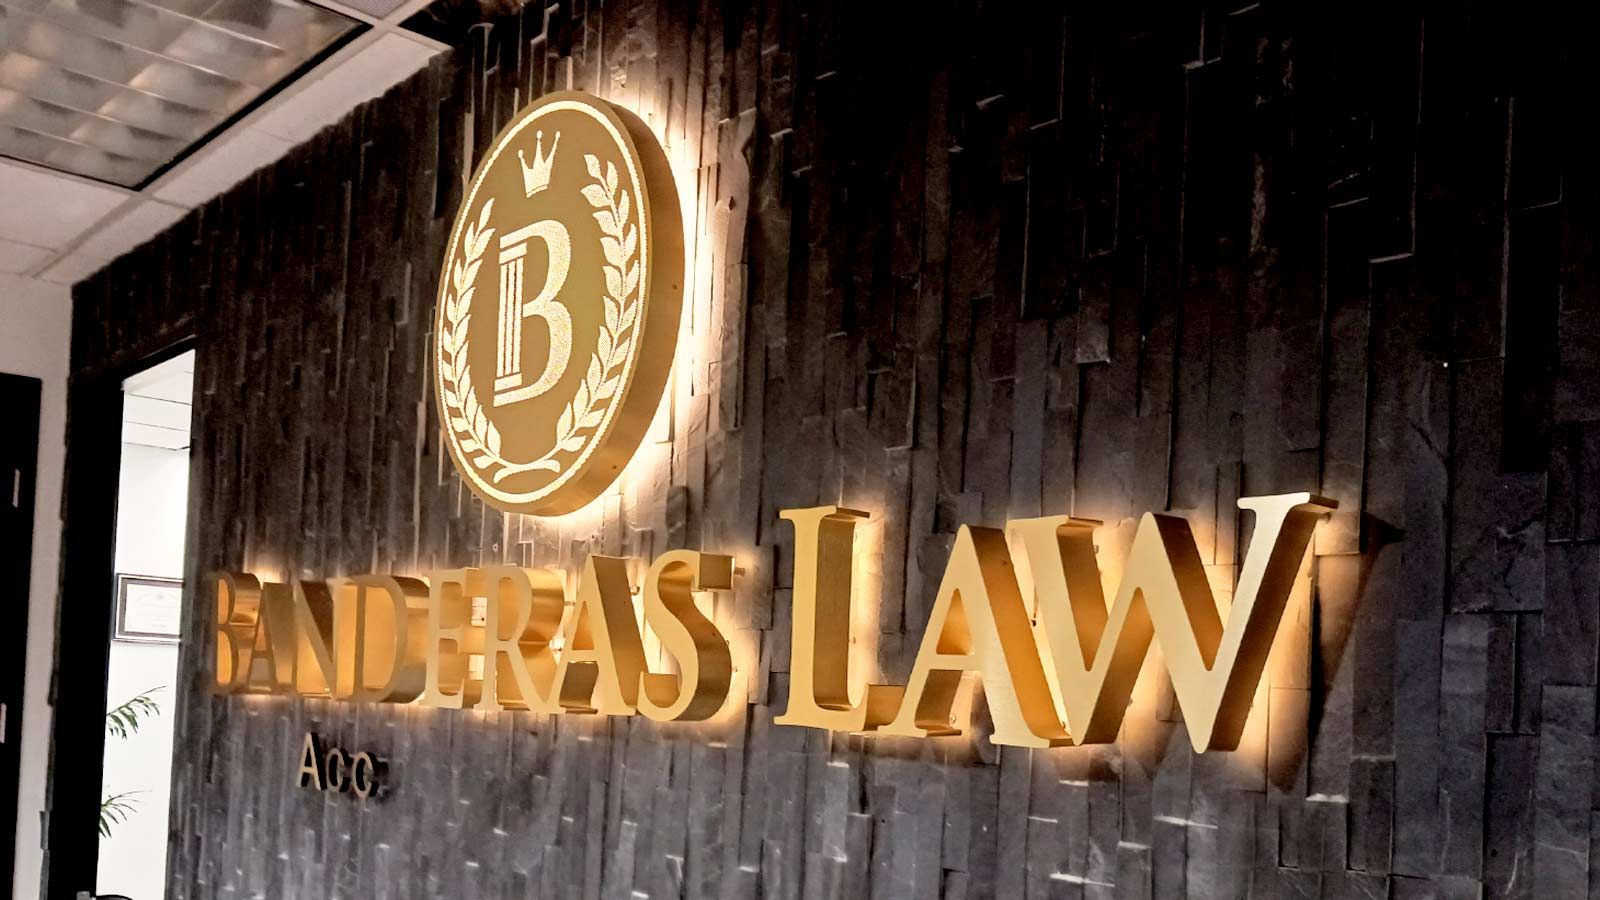 Banderas Law backlit letters for interior branding